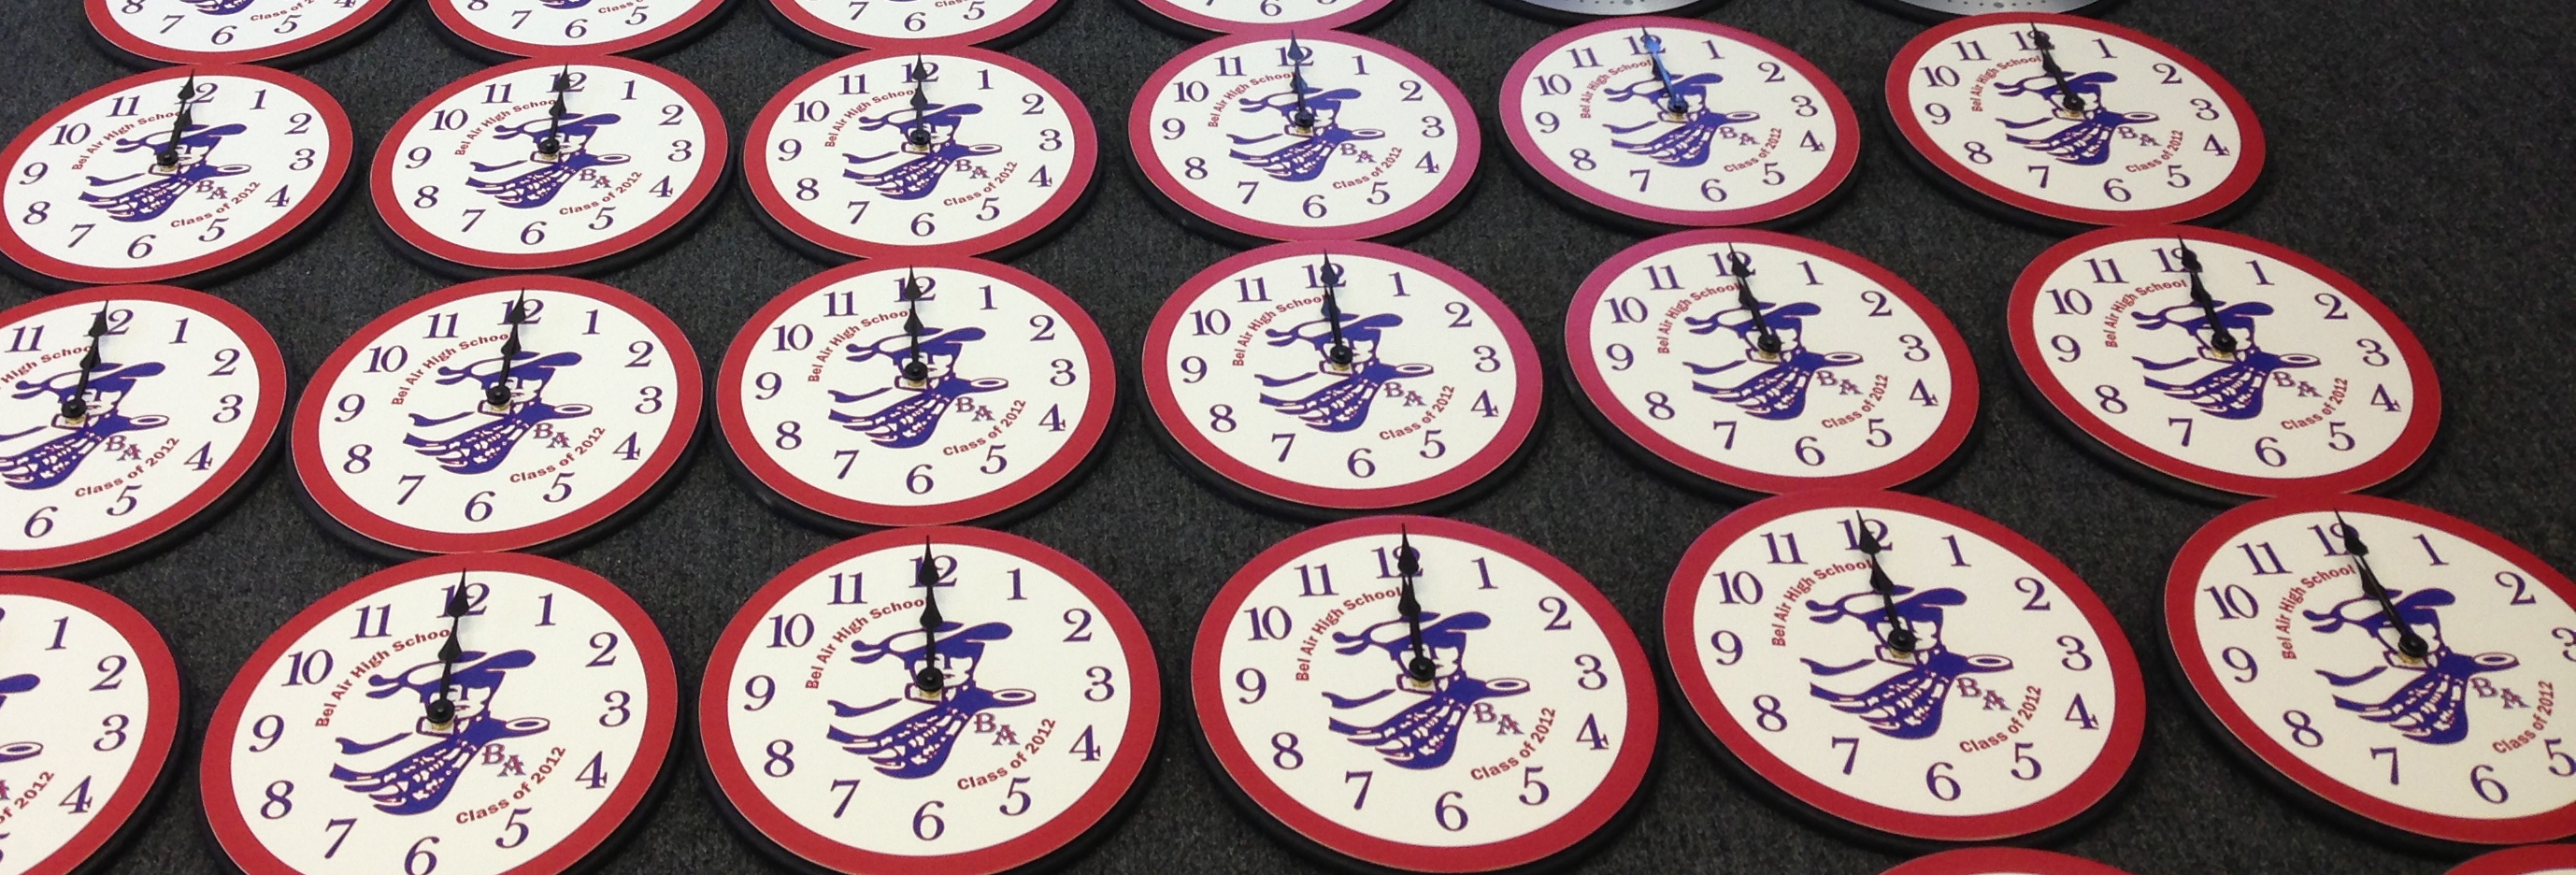 Bel Air High School Clocks